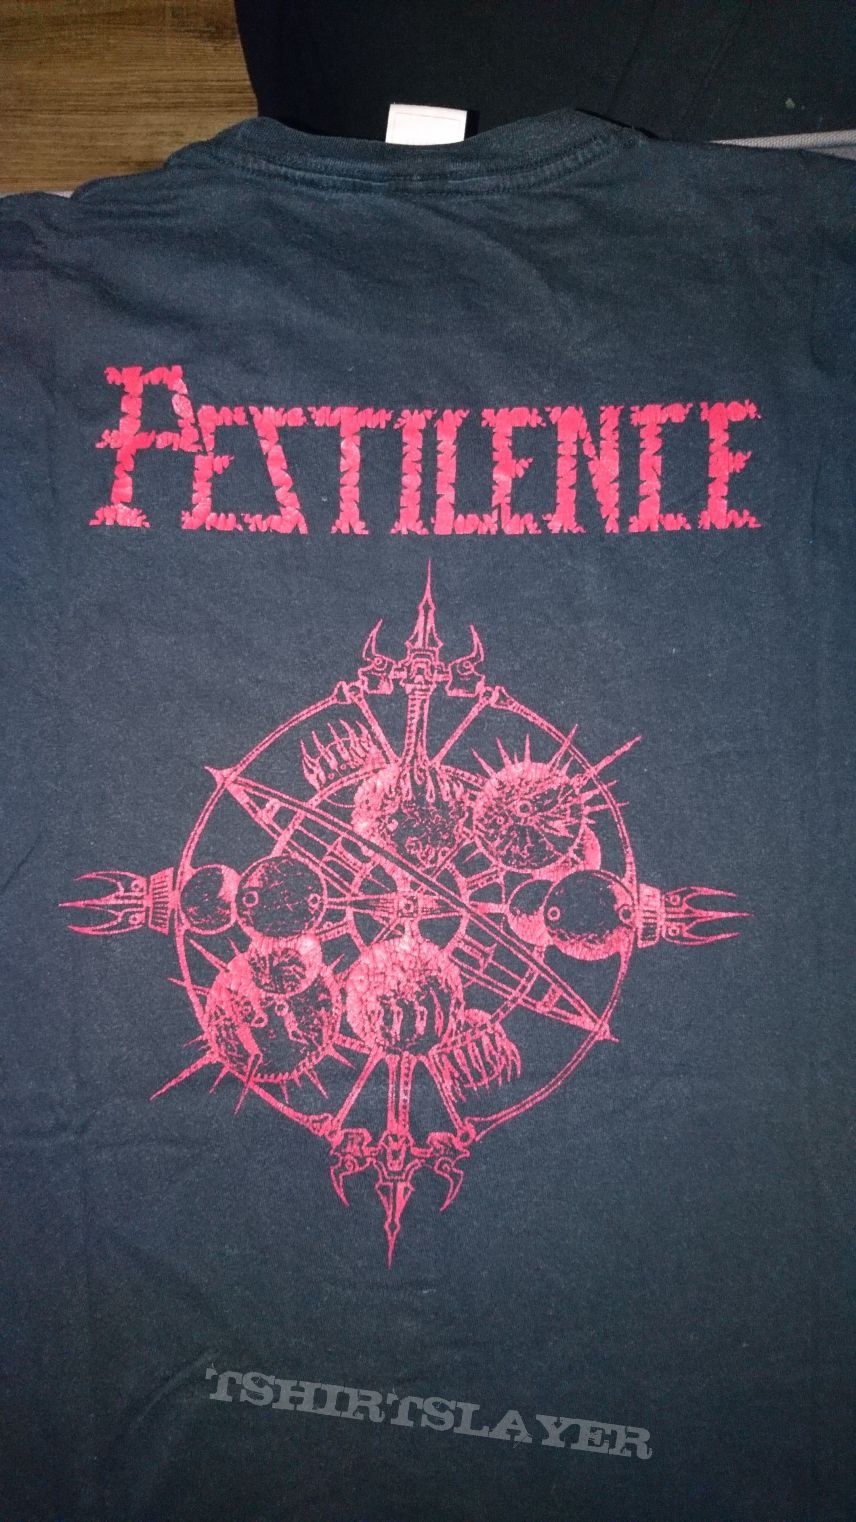 Pestilence - Testimony of the Ancients 